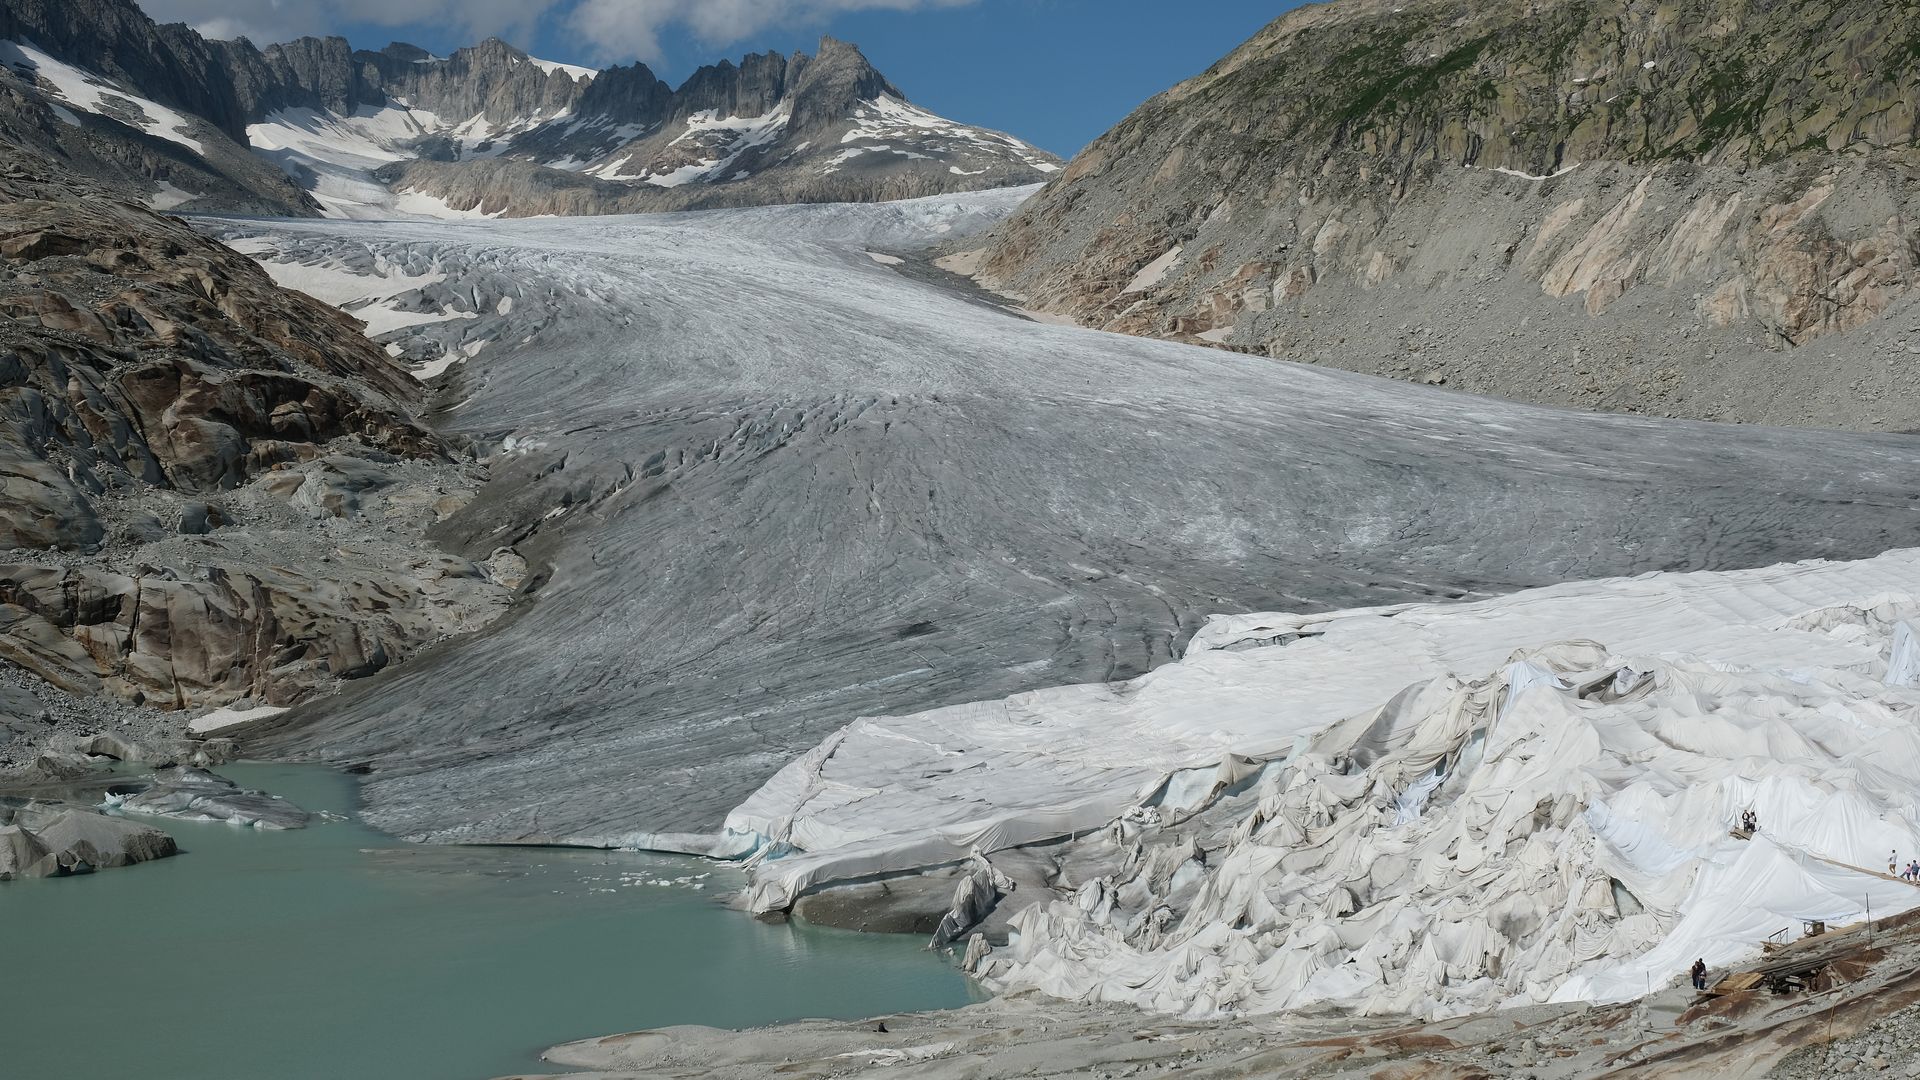 The Rhone glacier melting